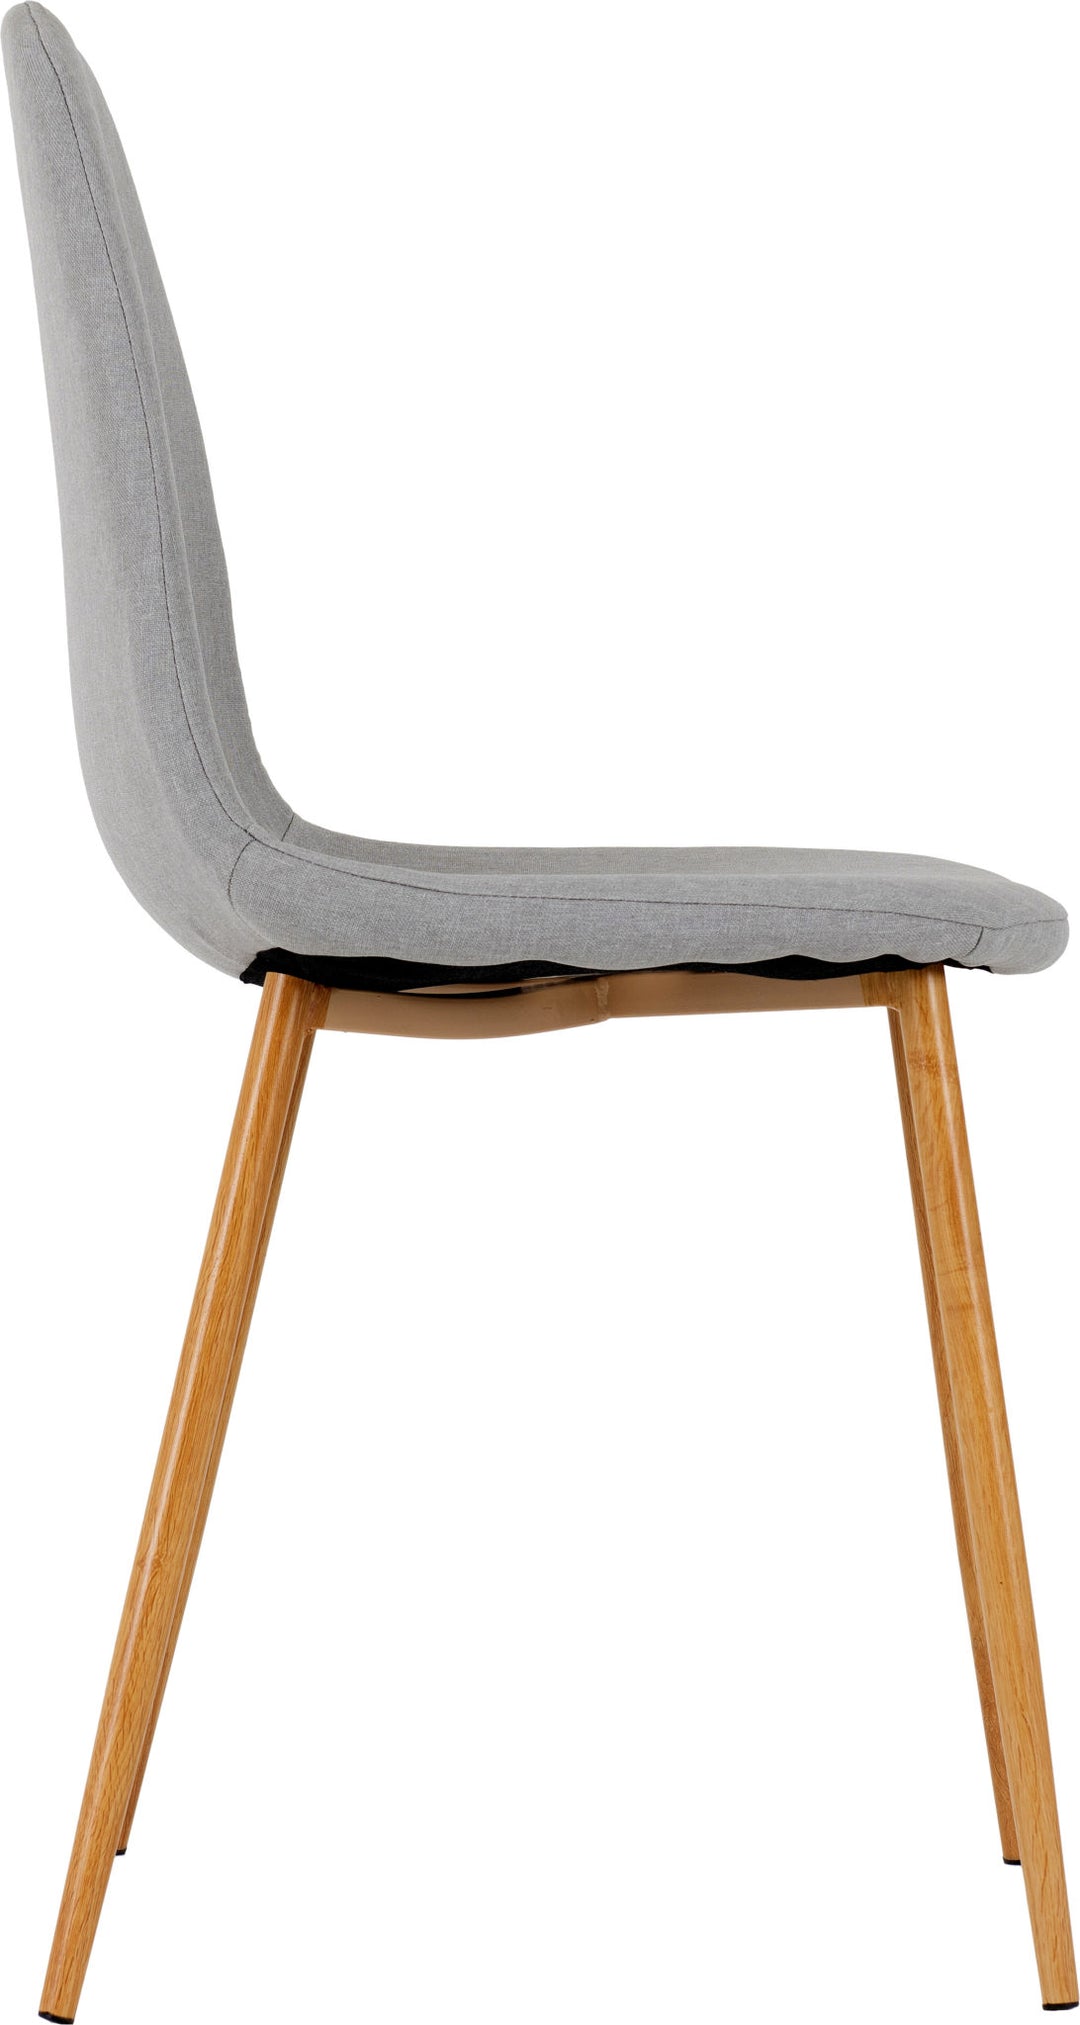 Barley Dining Set (X4 Chairs) - Oak Veneer/Grey Fabric/Oak Effect